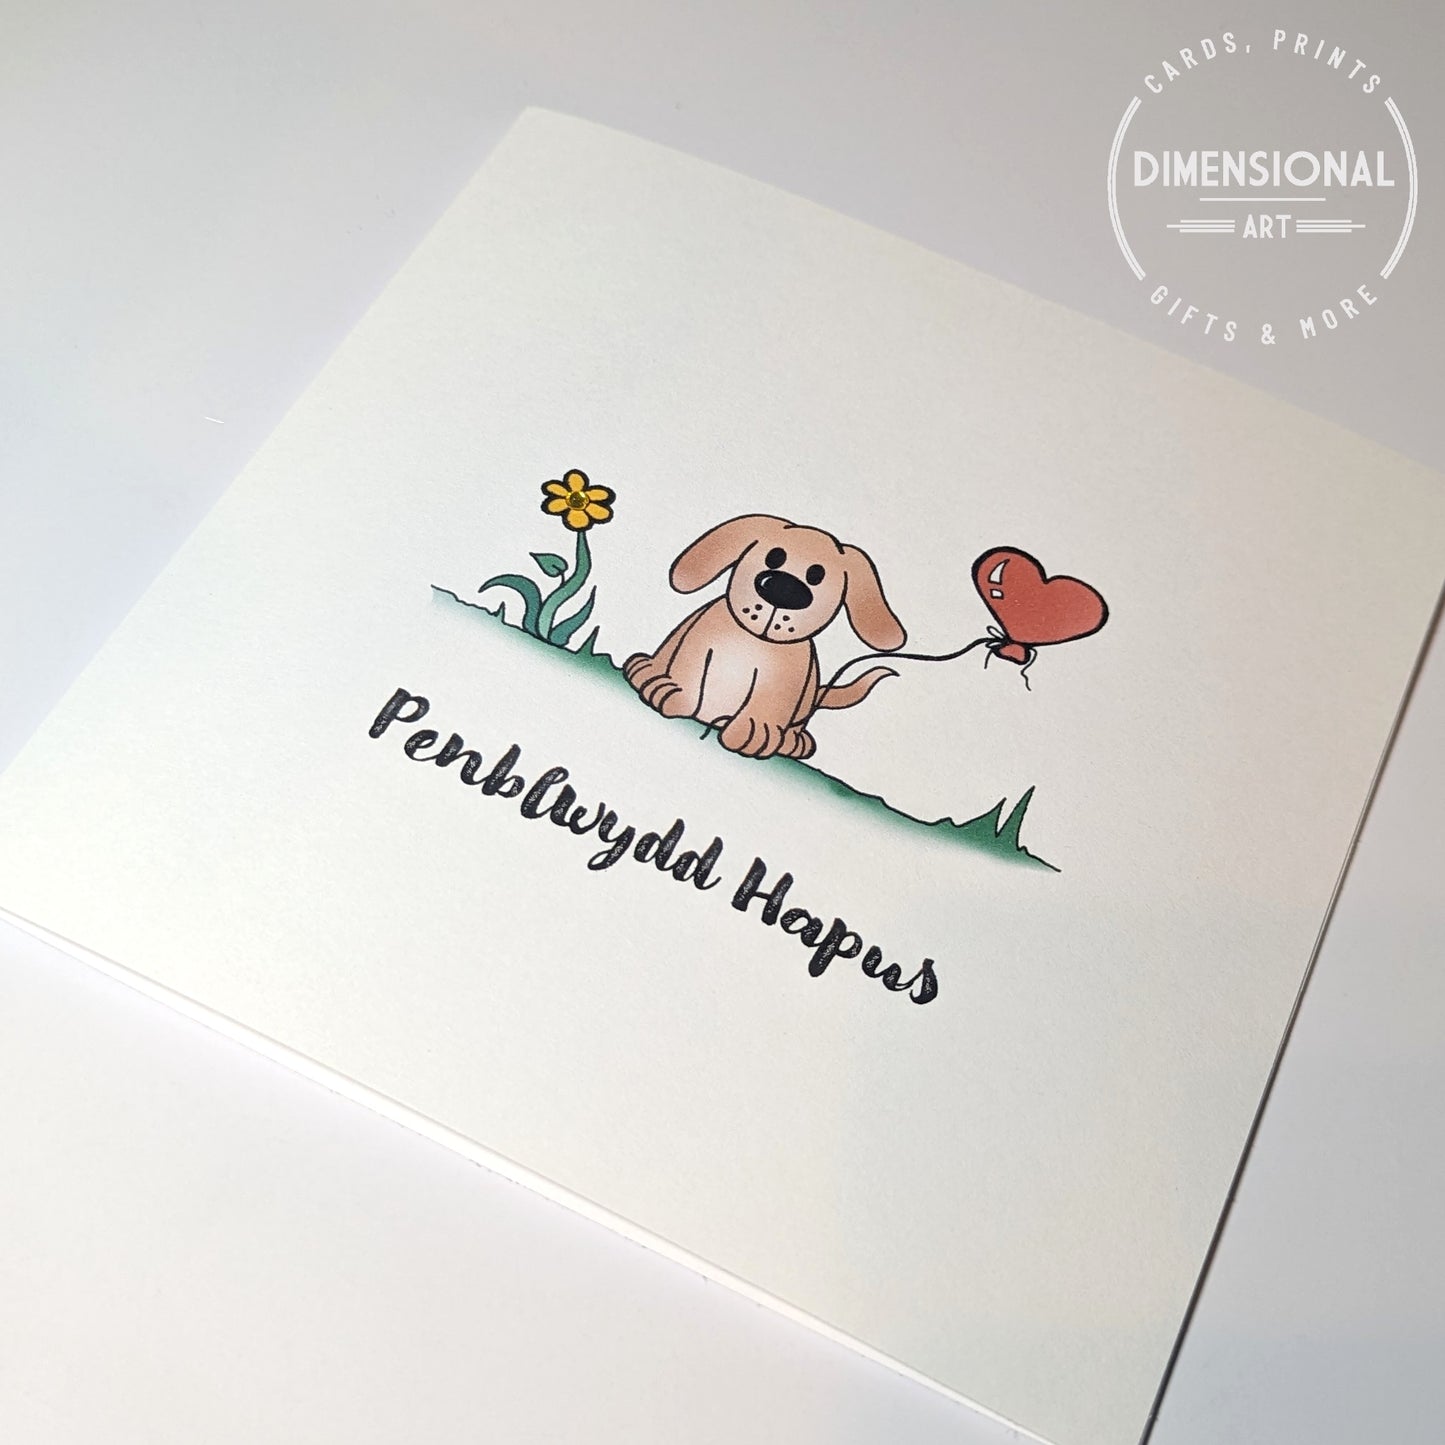 Dog heart balloon Penblwydd Hapus (Birthday Card) - Welsh Card